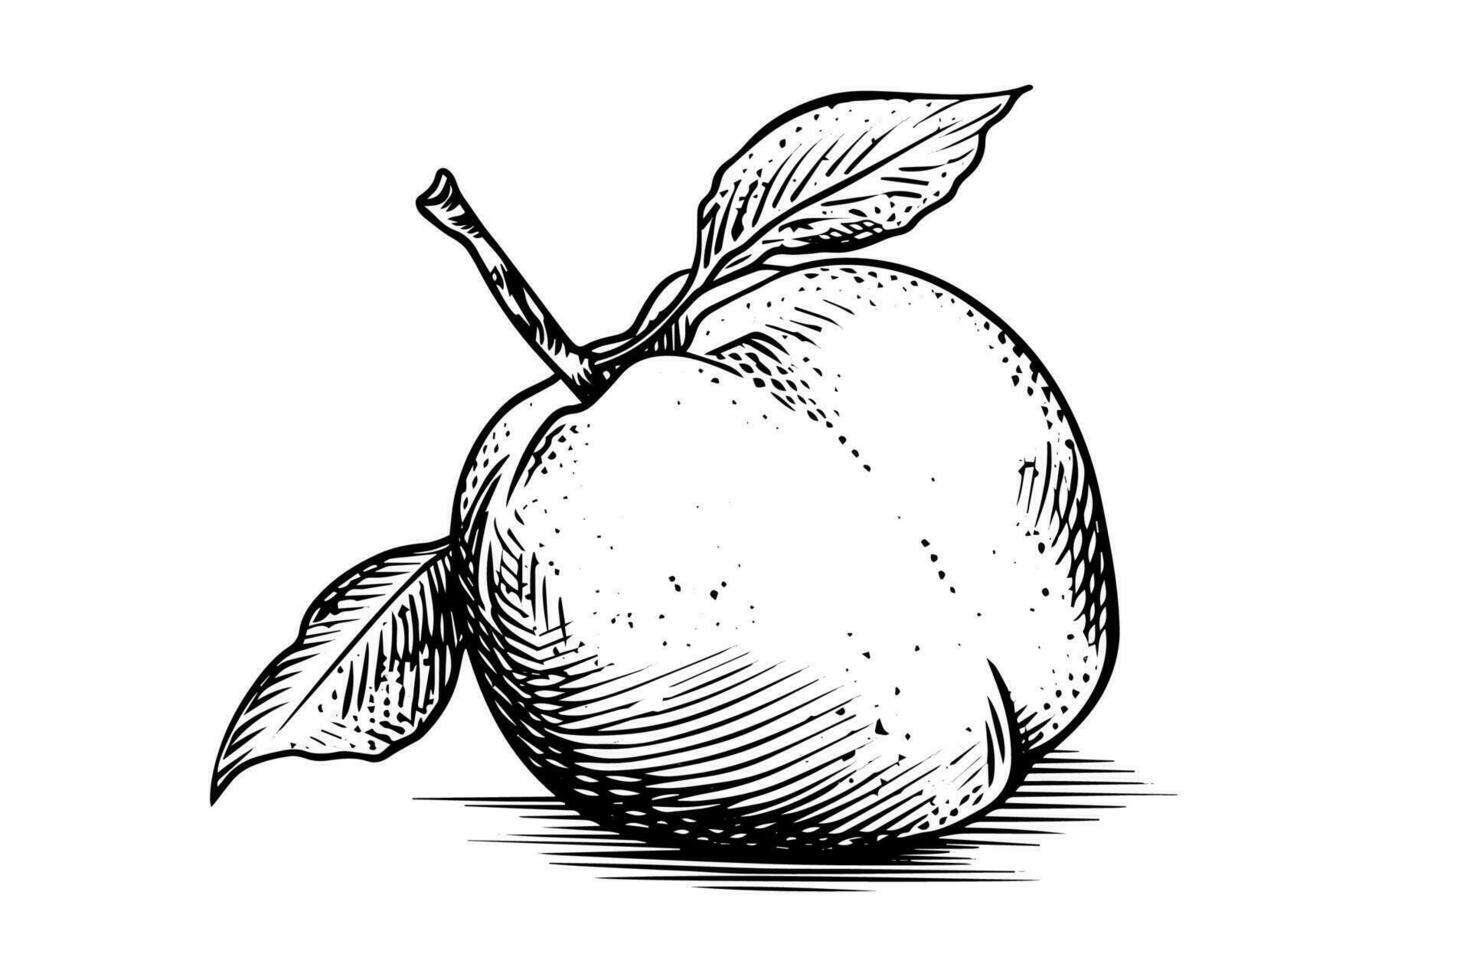 persika eller aprikos frukt hand dragen skiss i graverat stil. vektor